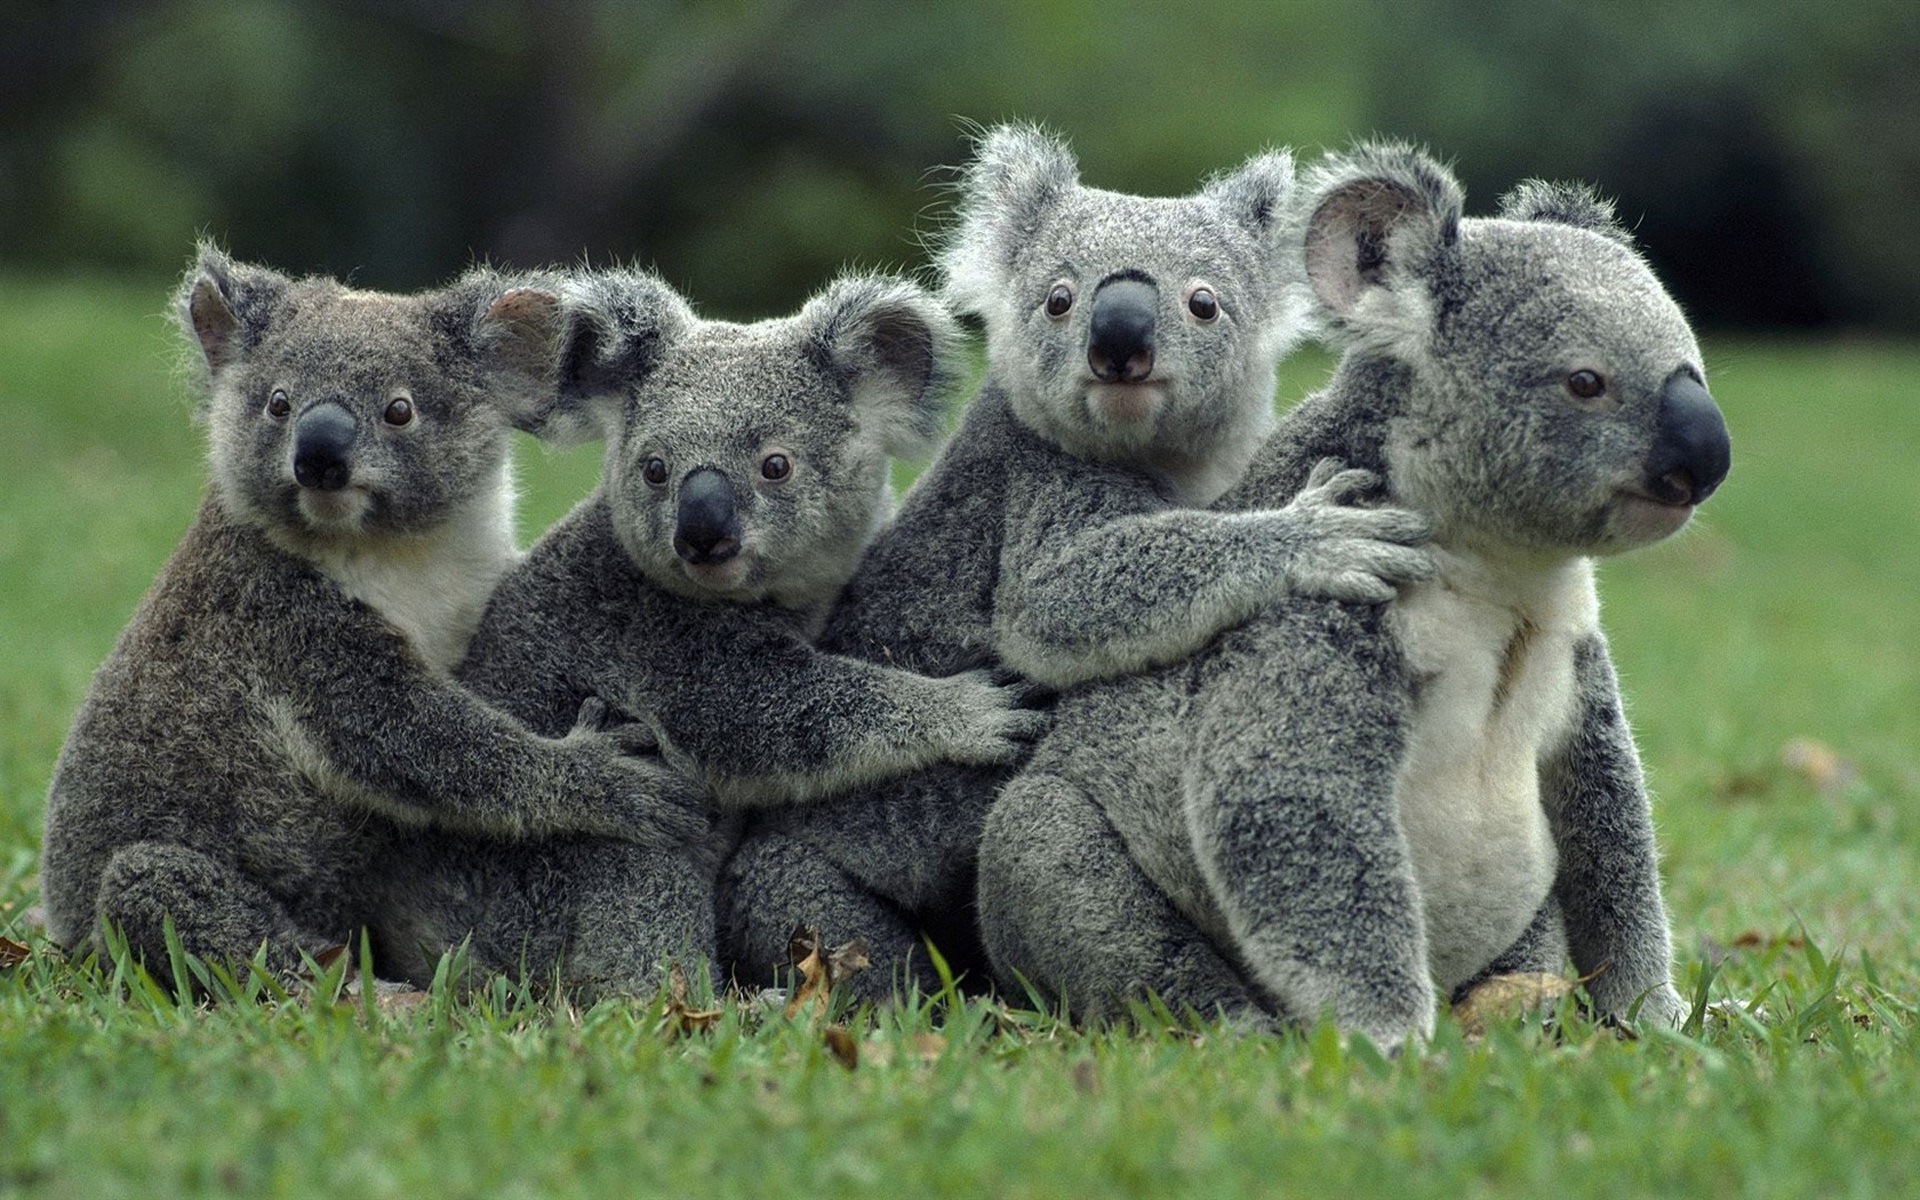 A big family of koalas